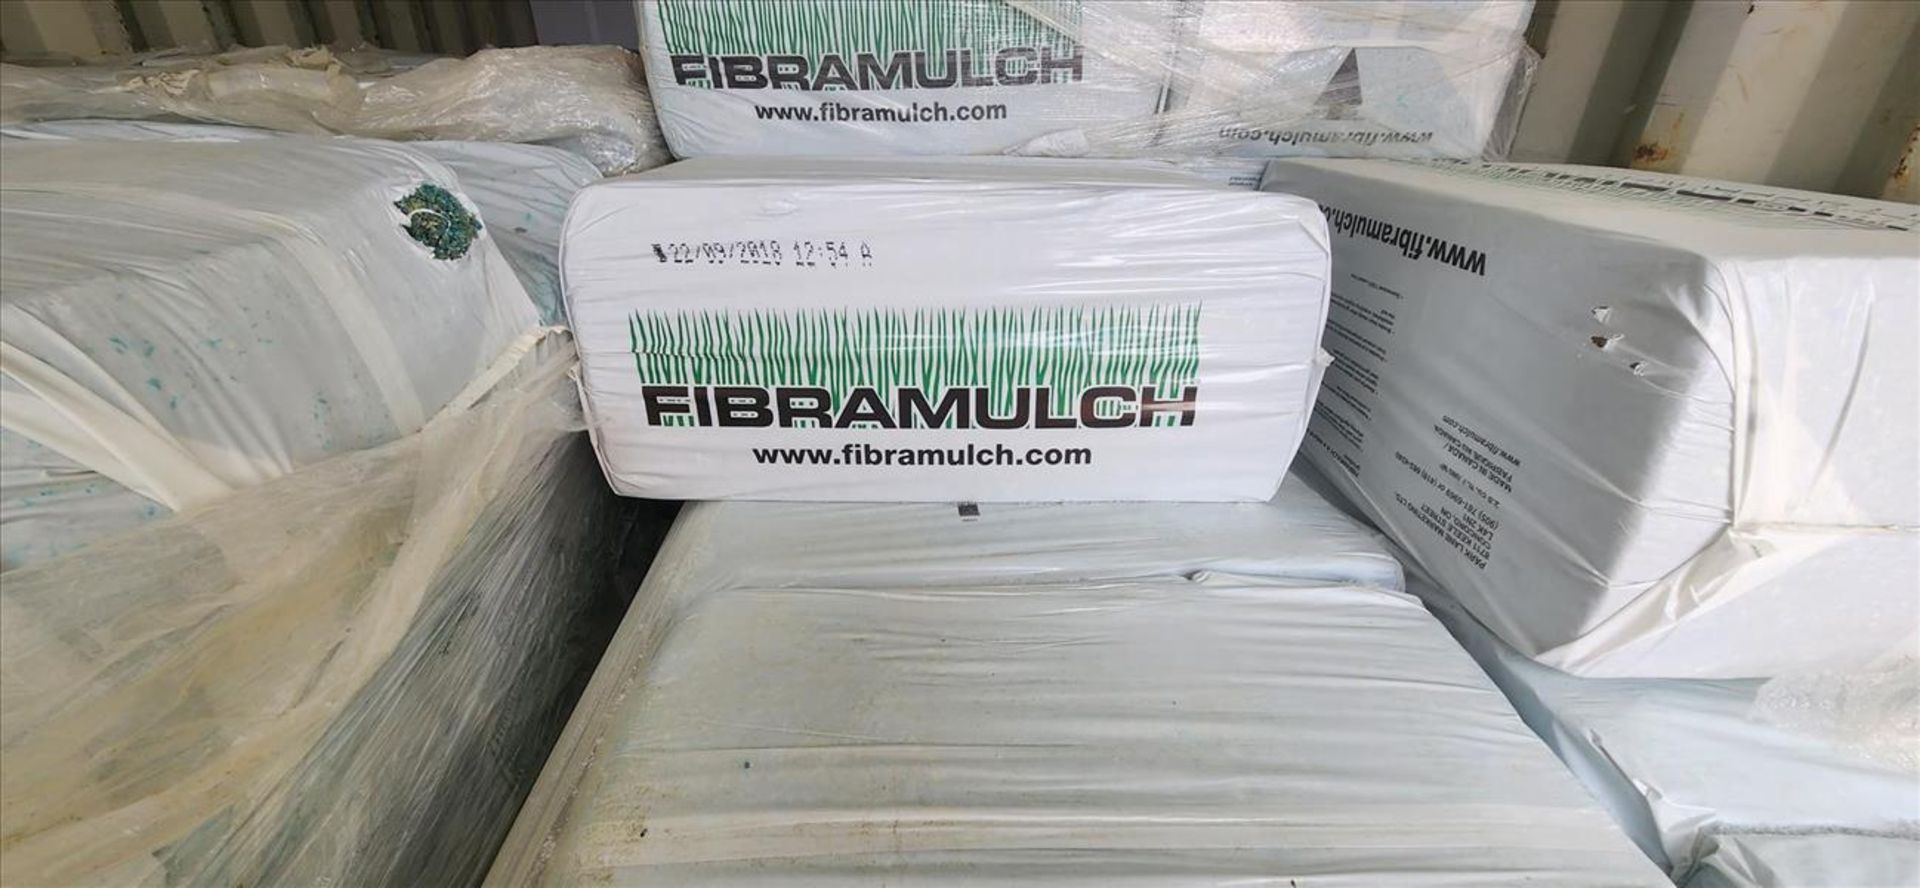 sea container, 40 ft. c/w contents: Fibramulch hydraulic seeding mulch (Asset Location: Hallnor